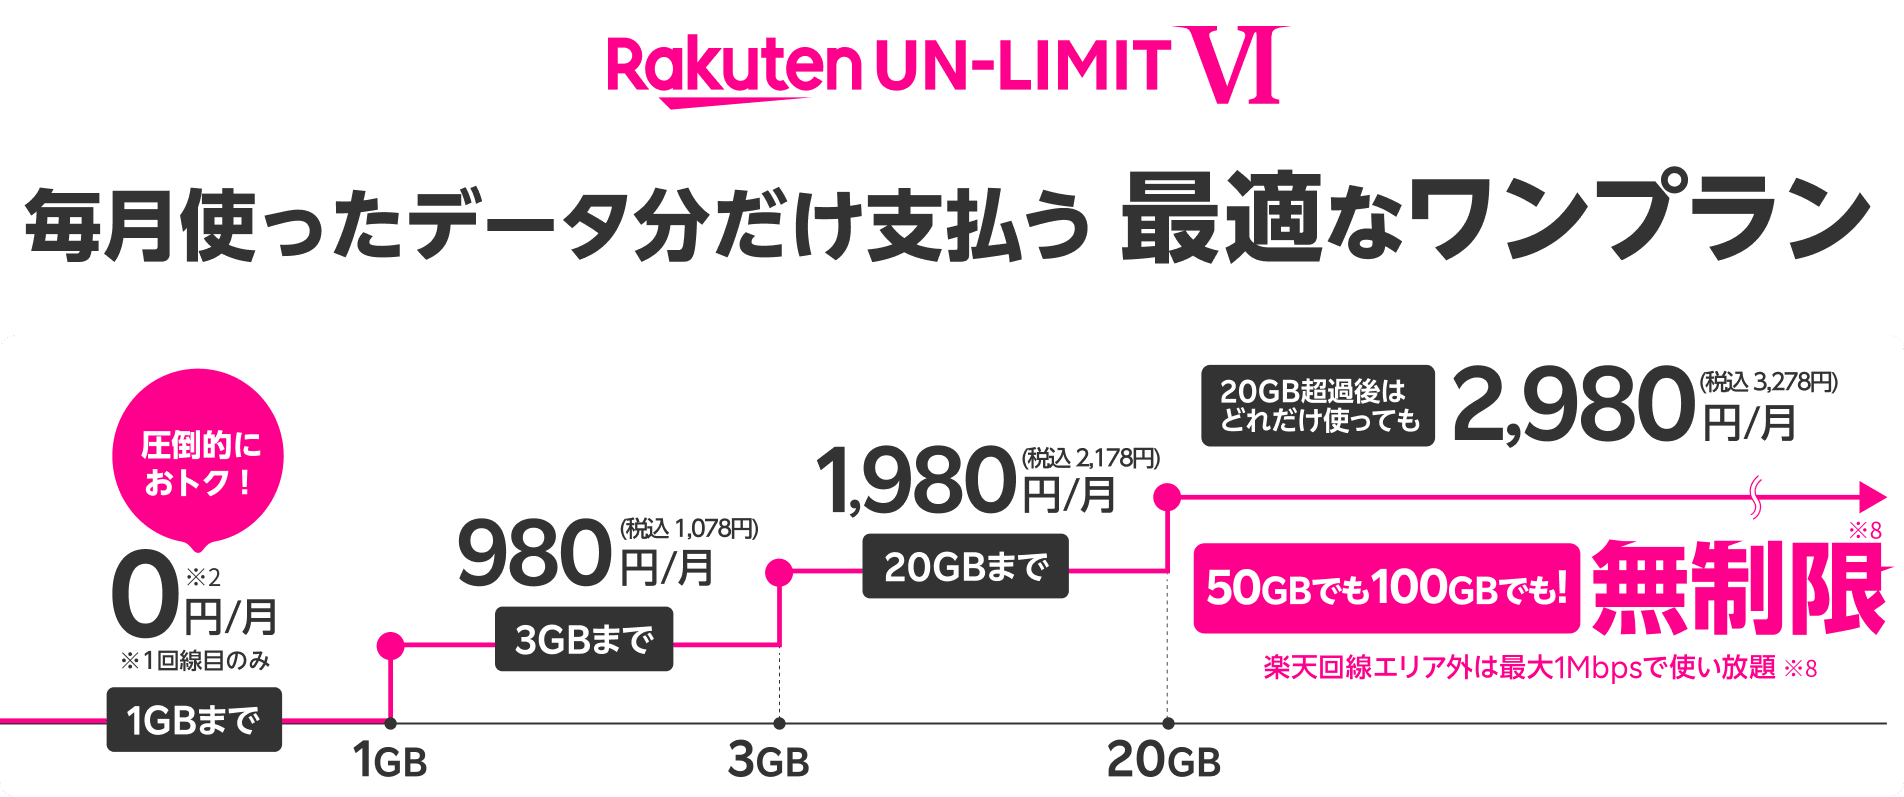 「Rakuten UN-LIMIT VI」のお申し込みで 日本全国 データ使い放題 ※5 楽天回線エリア 高速でデータ使い放題 5Gエリアは5G通信使い放題 ※6 パートナー回線エリア データ容量5GB/月 超過後は最大1Mbpsで使い放題 ※7